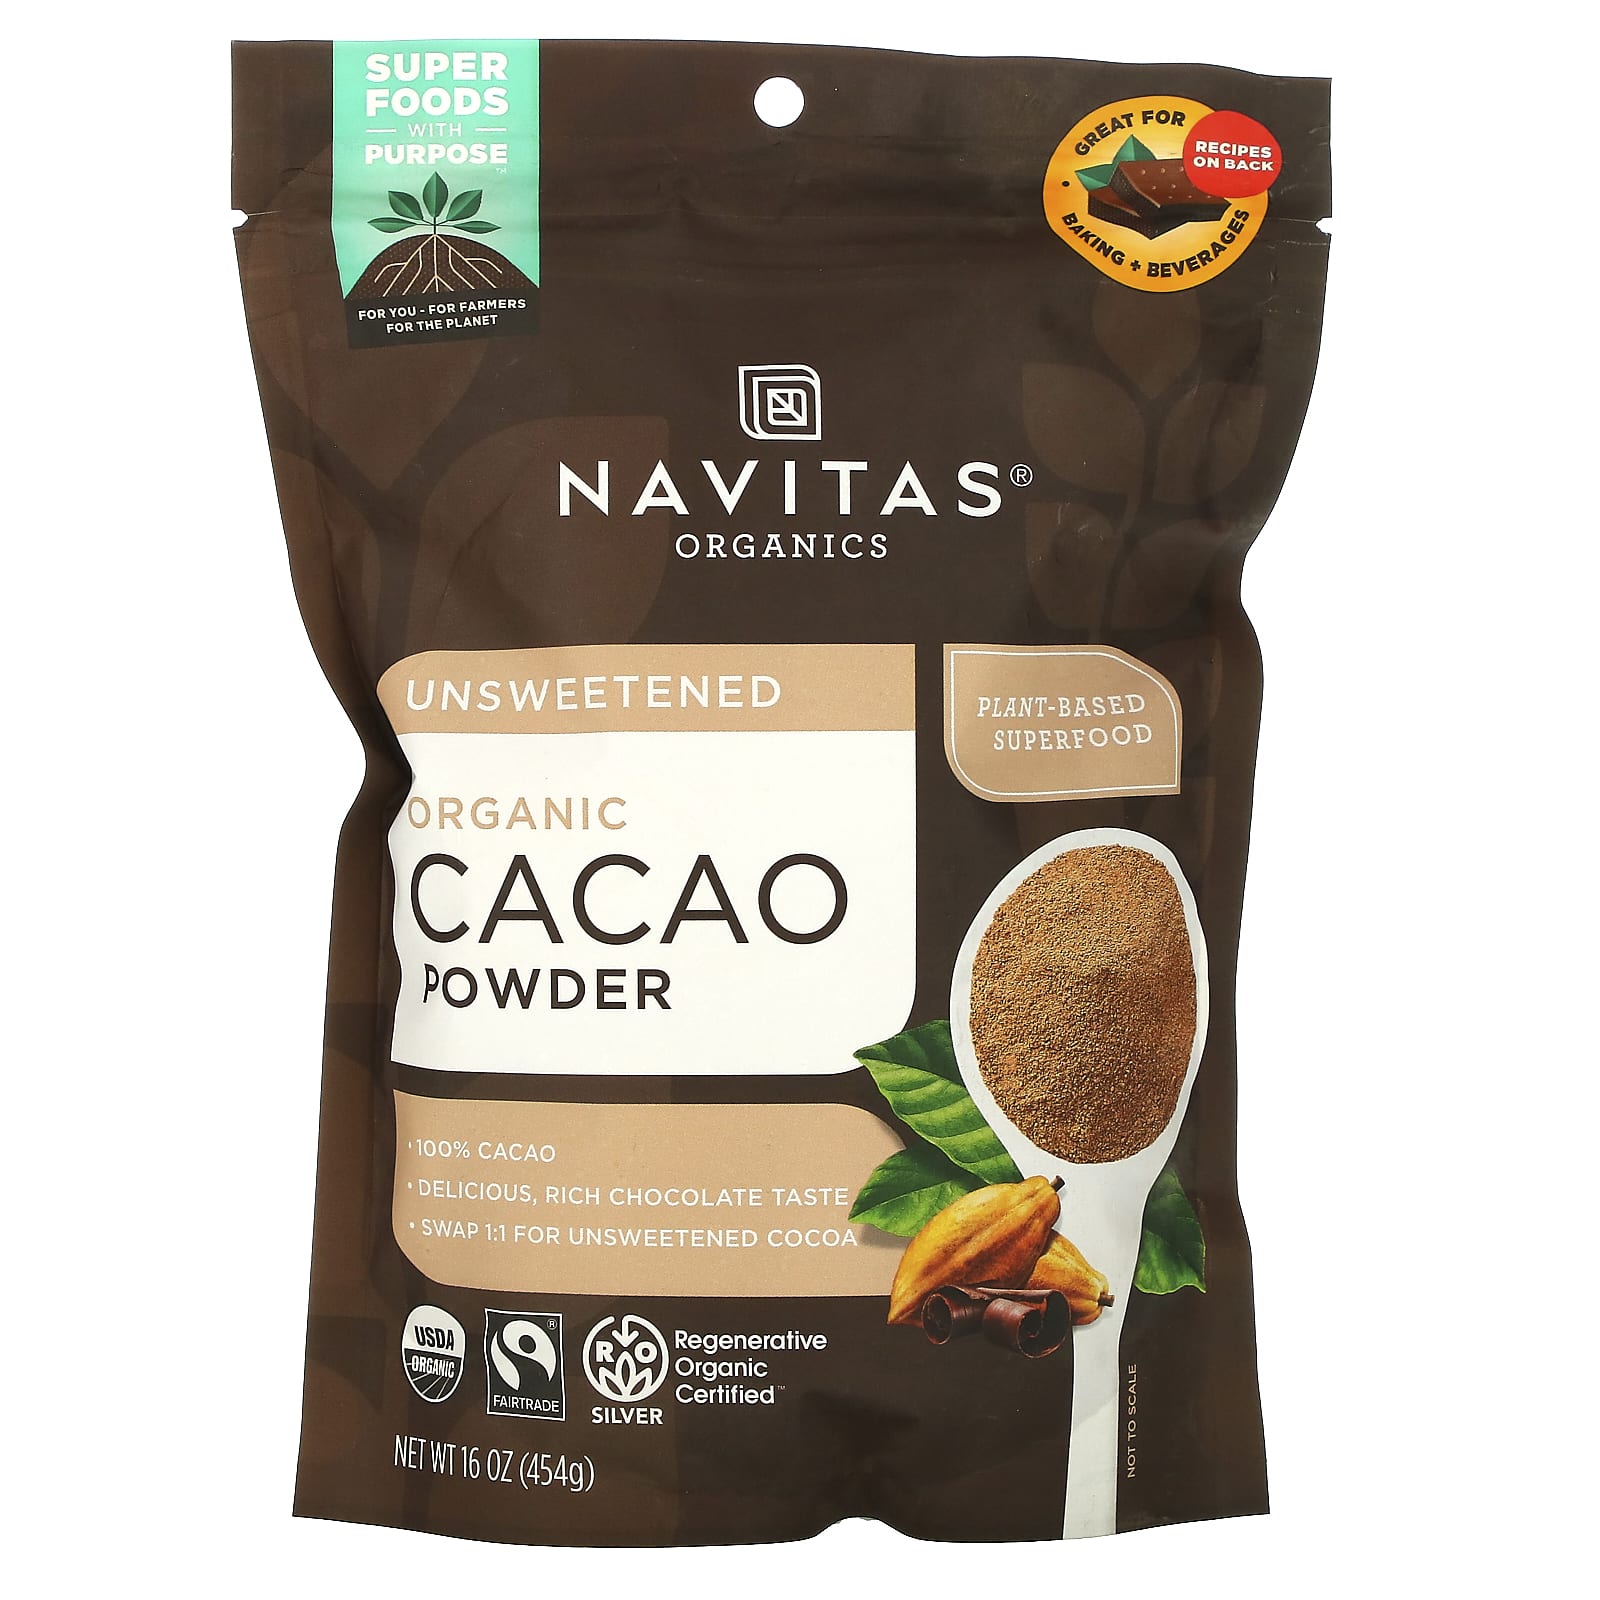 Navitas Organics Органический порошок какао 16 унц. (454 г) navitas organics органический порошок маки 16 унций 454 г